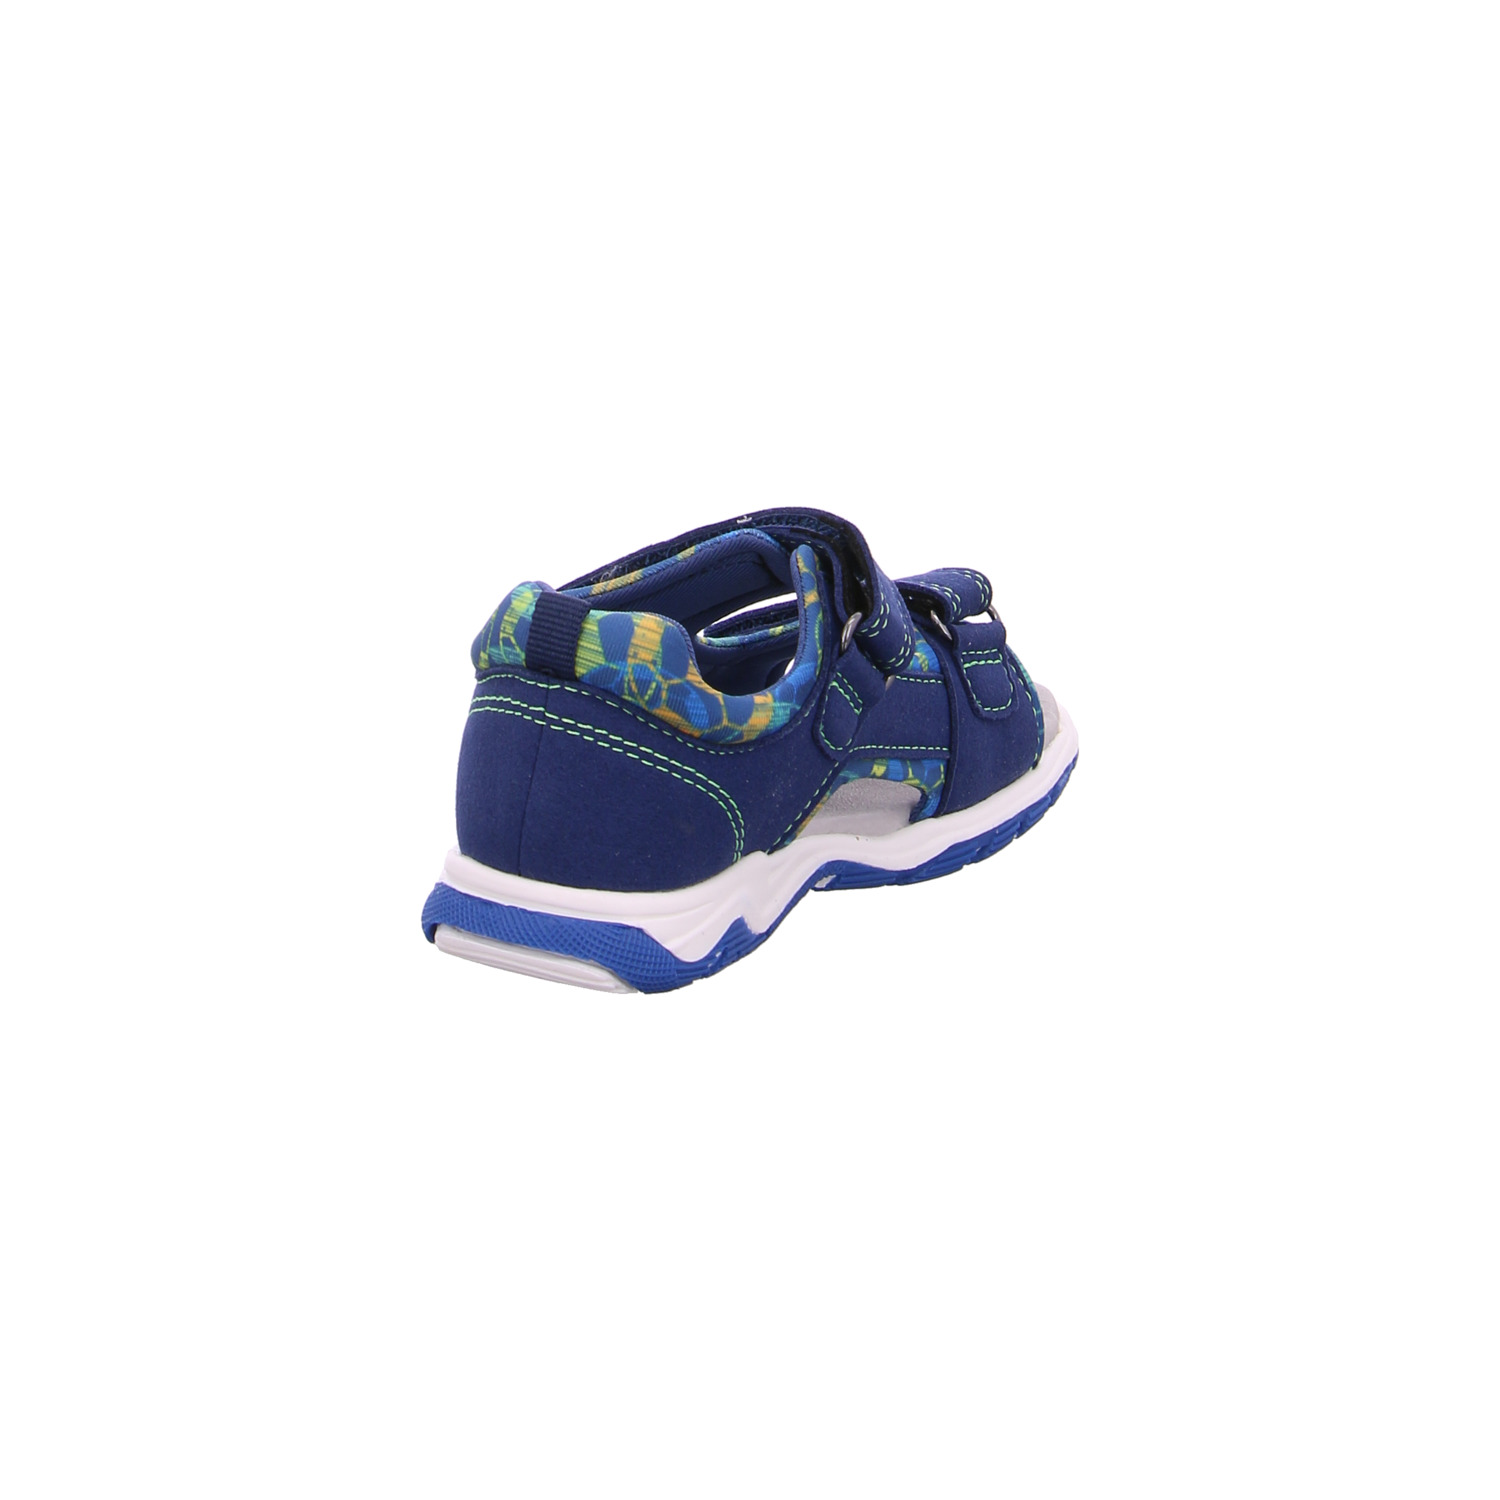 richter-kinder-sandaletten-jungen-blau-119798-20